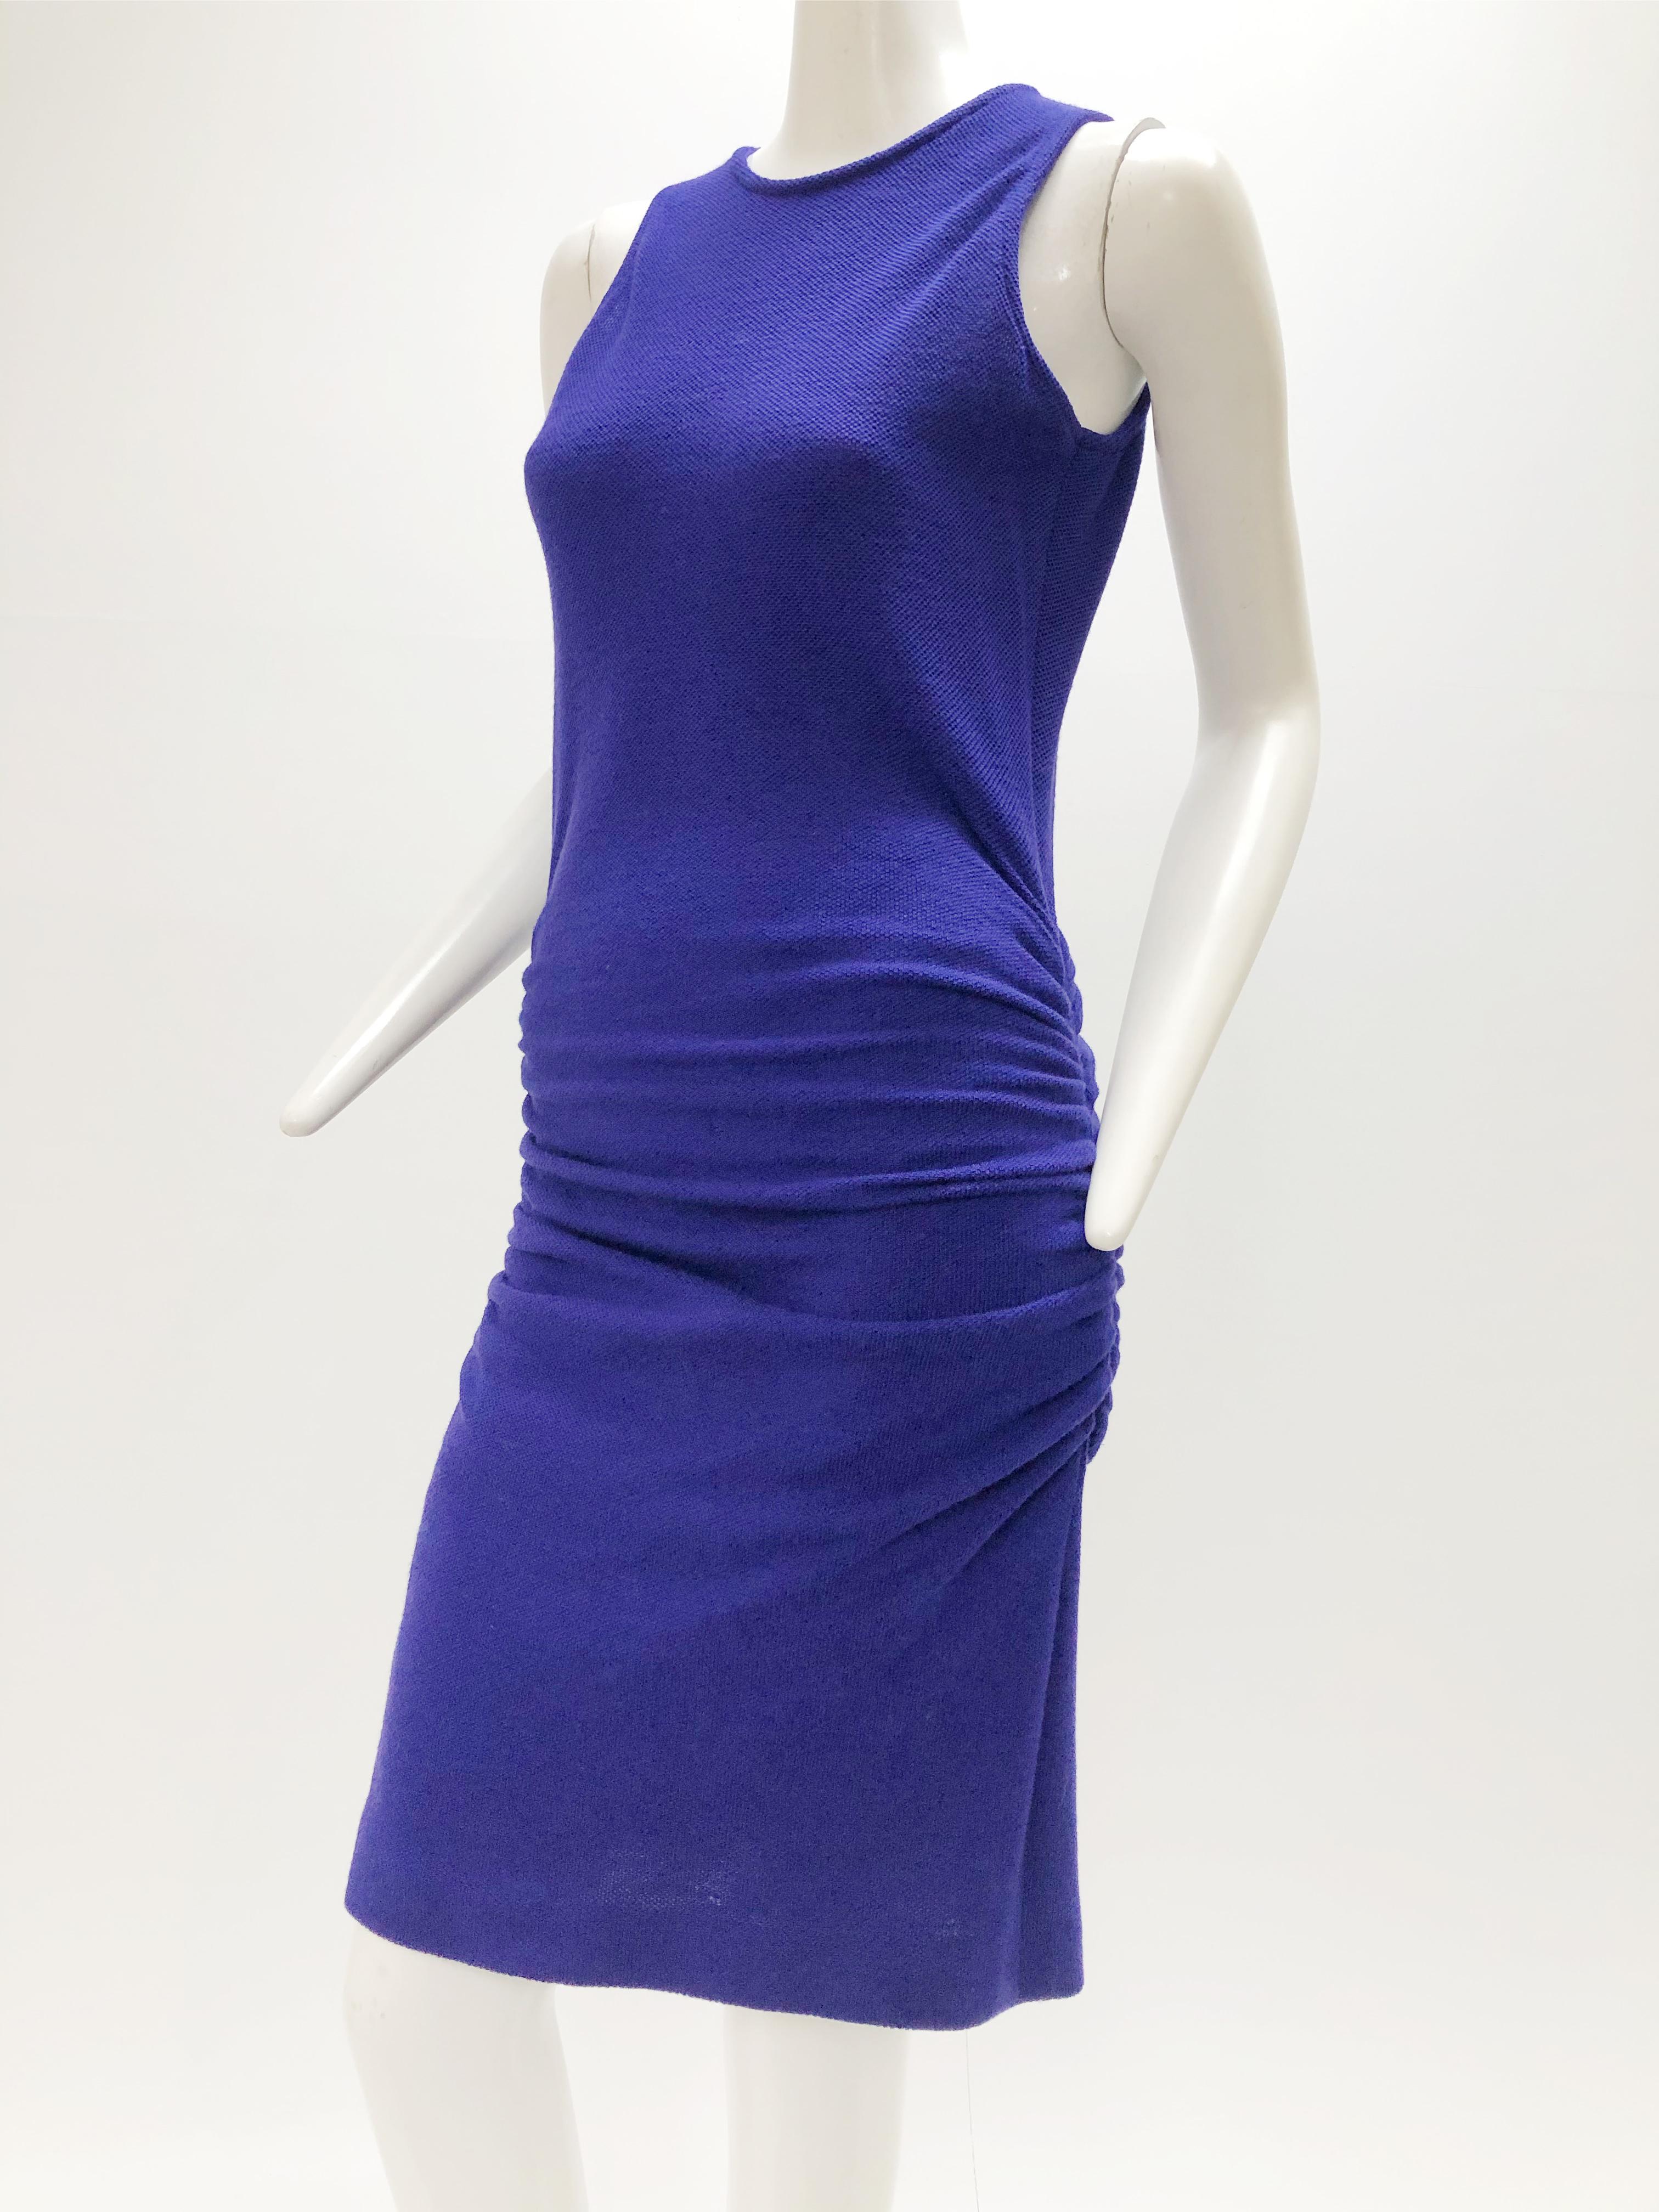 Women's 1980s Karl Lagerfeld Royal Purple Double Knit Wool Body-Con Dress w Back Buttons For Sale